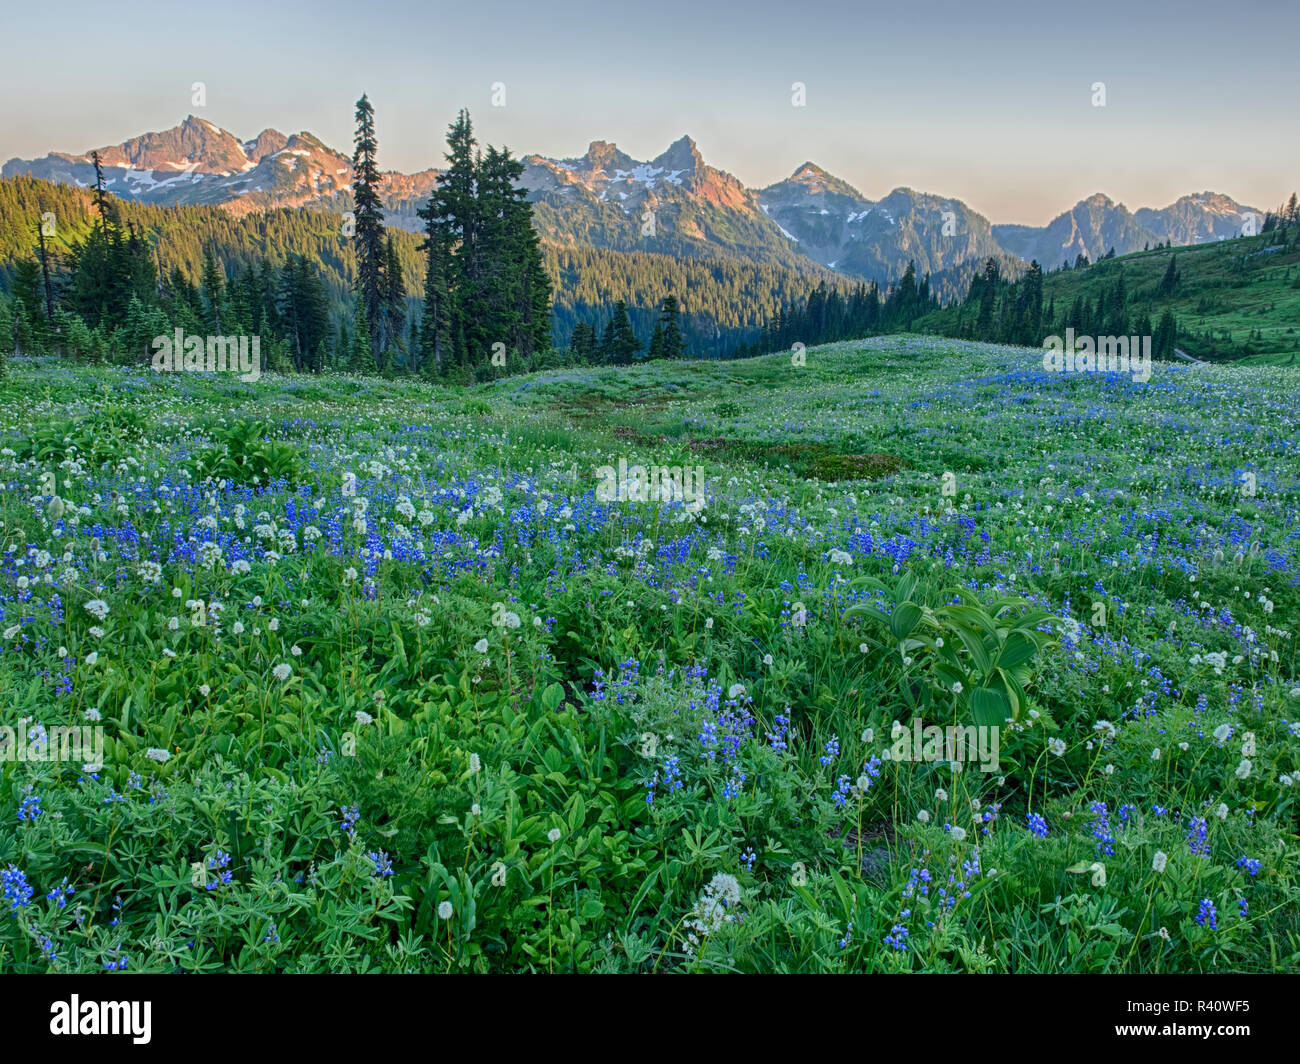 Washington State, Mount Rainier National Park, Tatoosh Range and Wildflowers Stock Photo